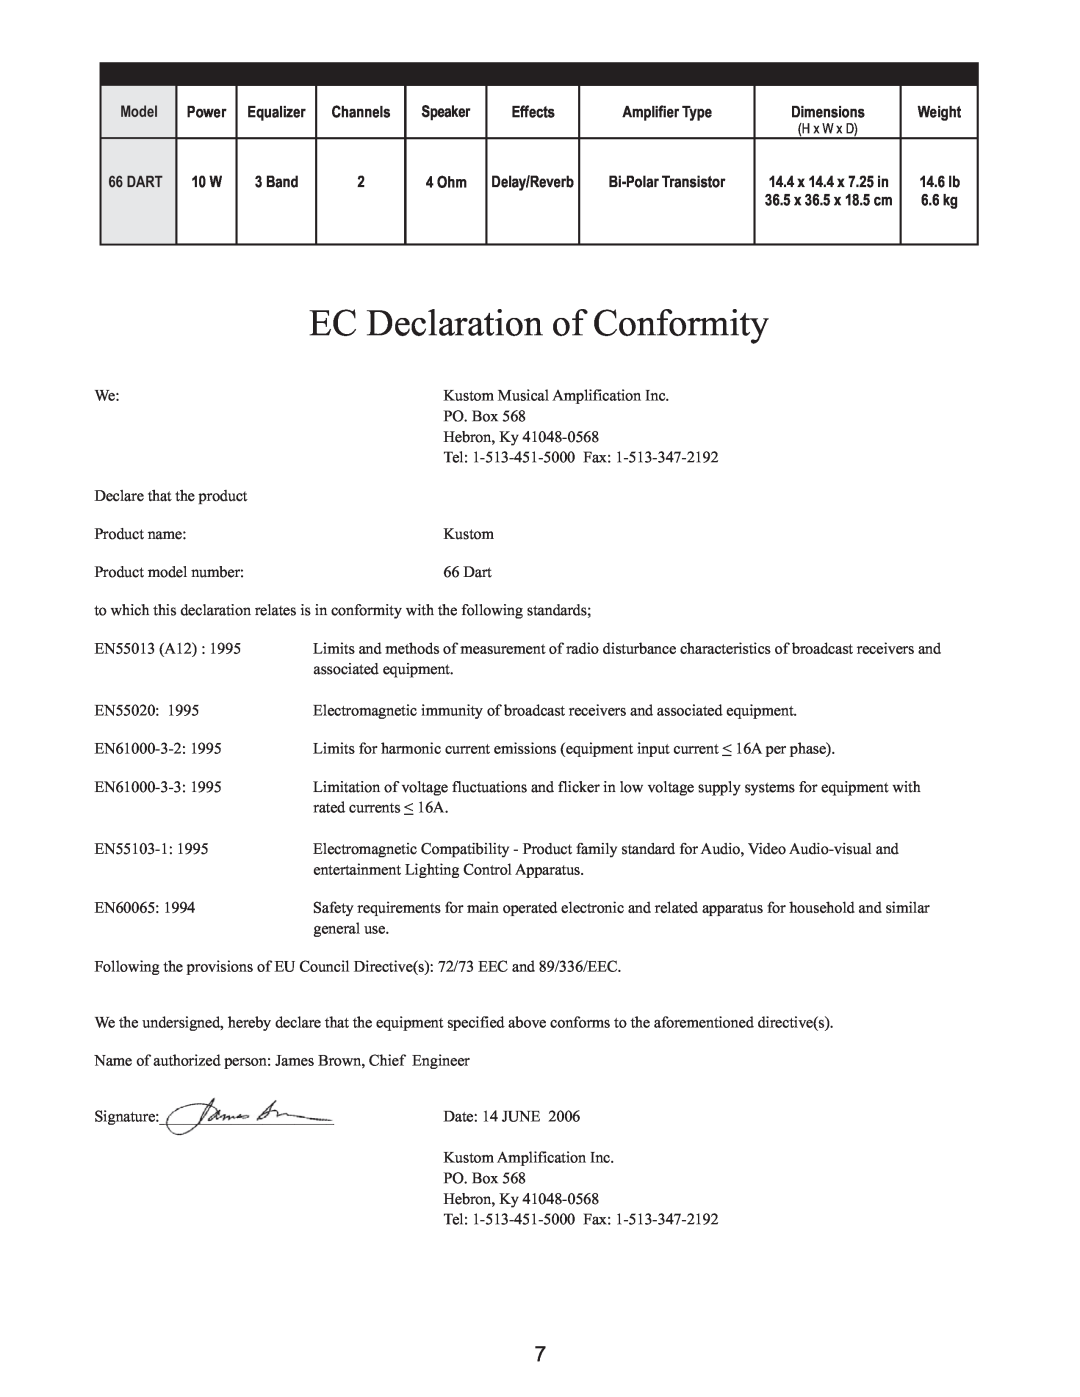 Kustom 66 Dart owner manual EC Declaration of Conformity 